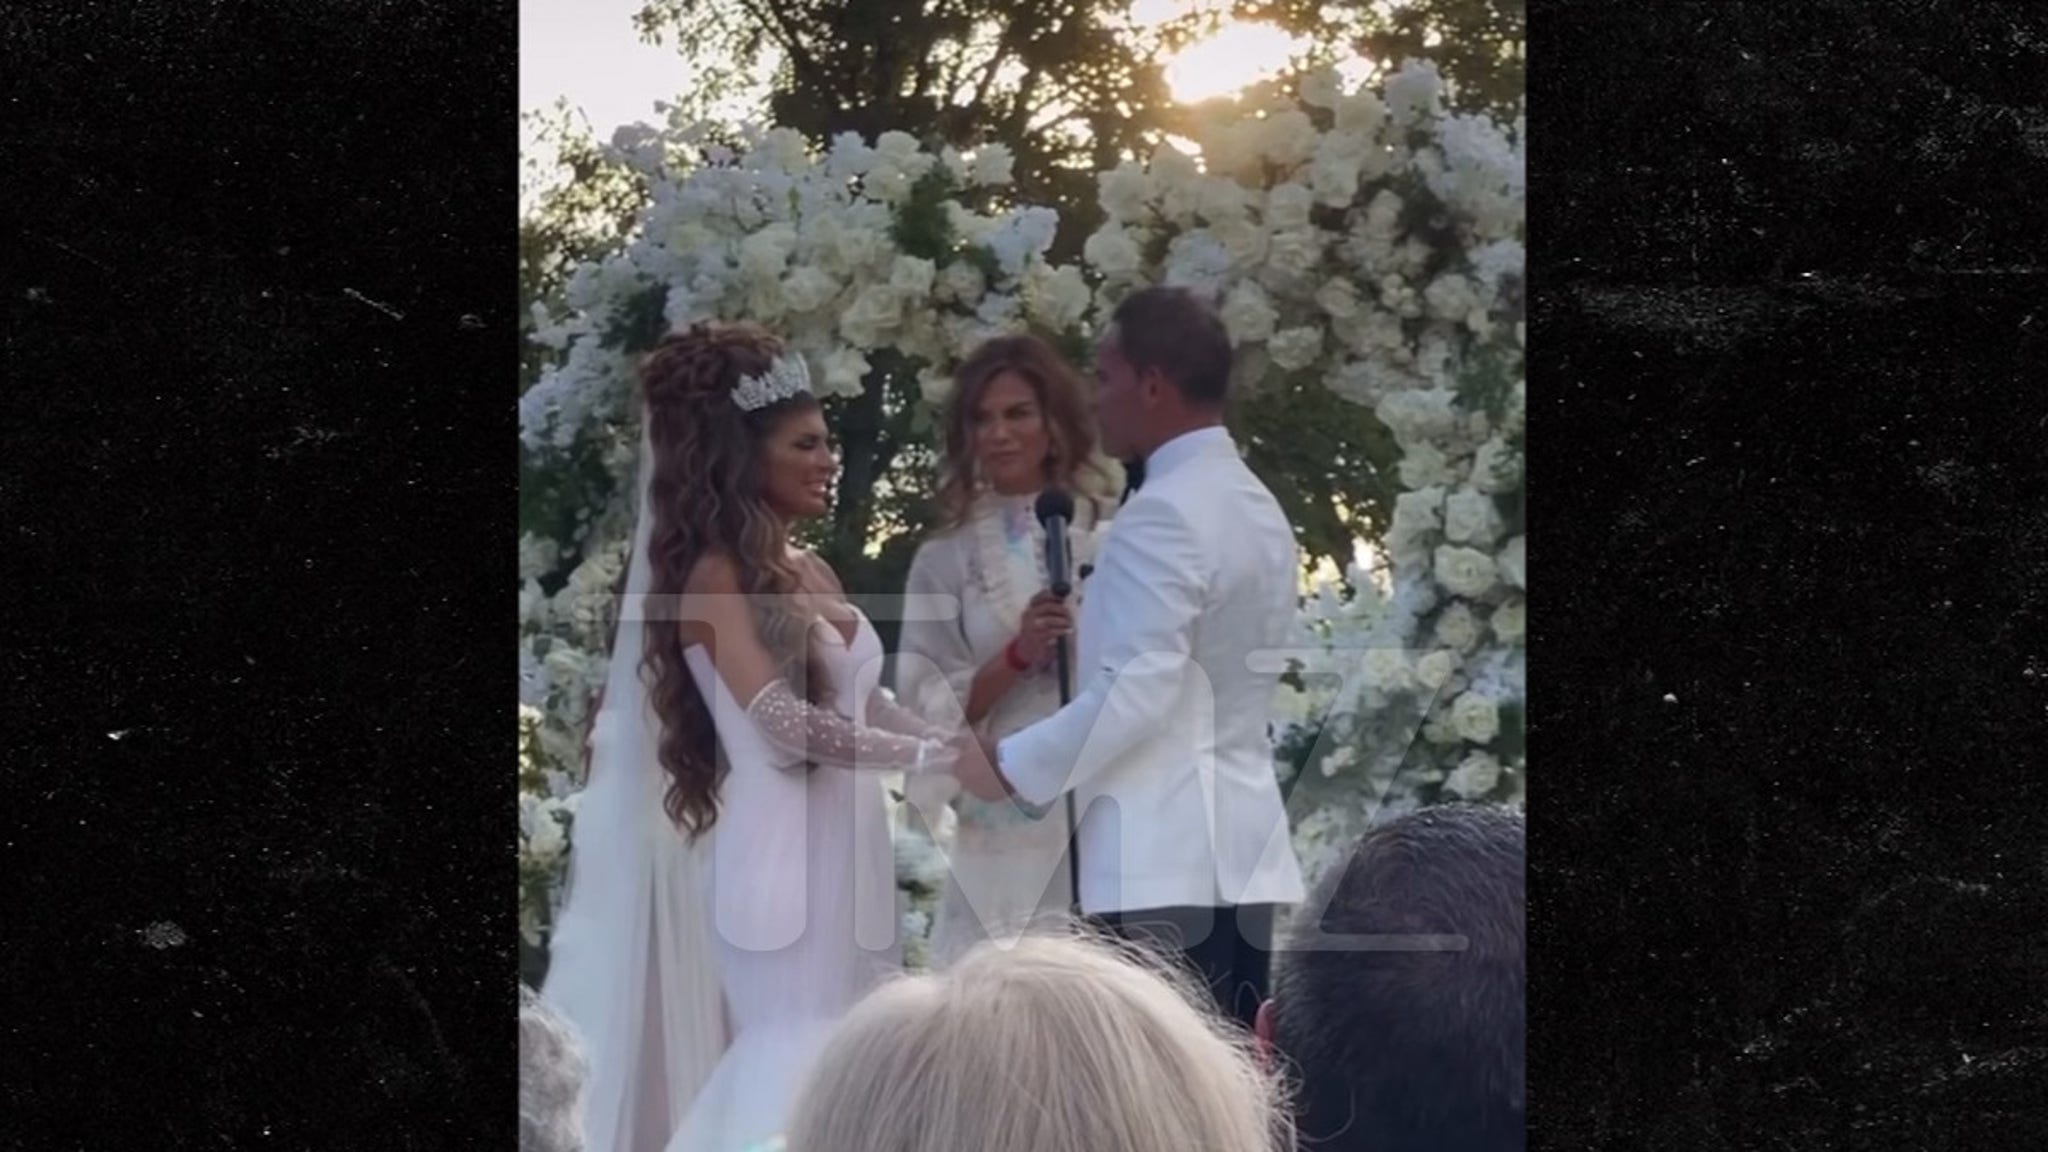 Teresa Giudice marries Luis Ruelas in a glamorous wedding ceremony